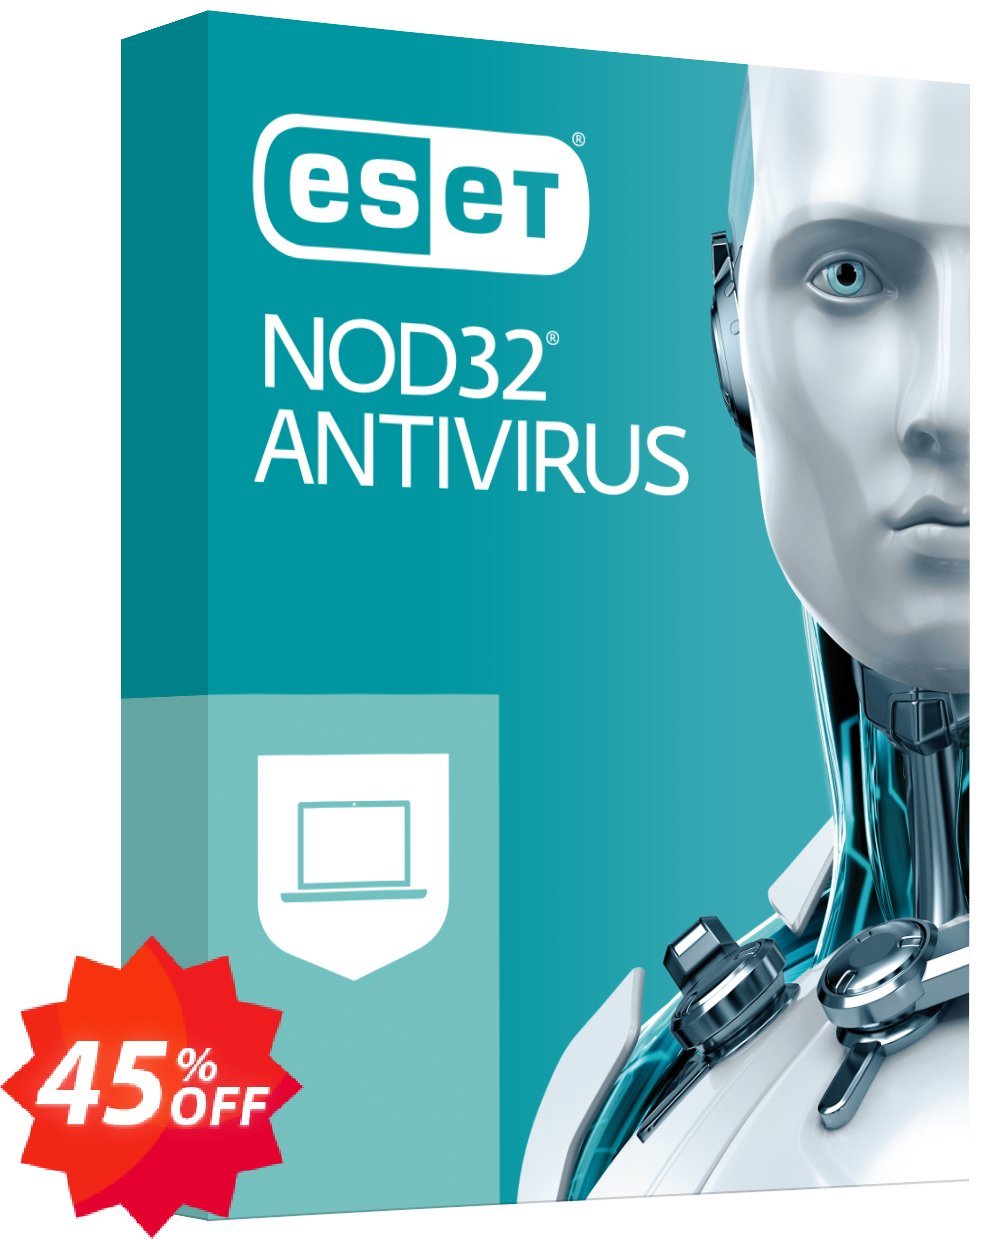 ESET NOD32 Antivirus -  3 Years 1 Device Coupon code 45% discount 